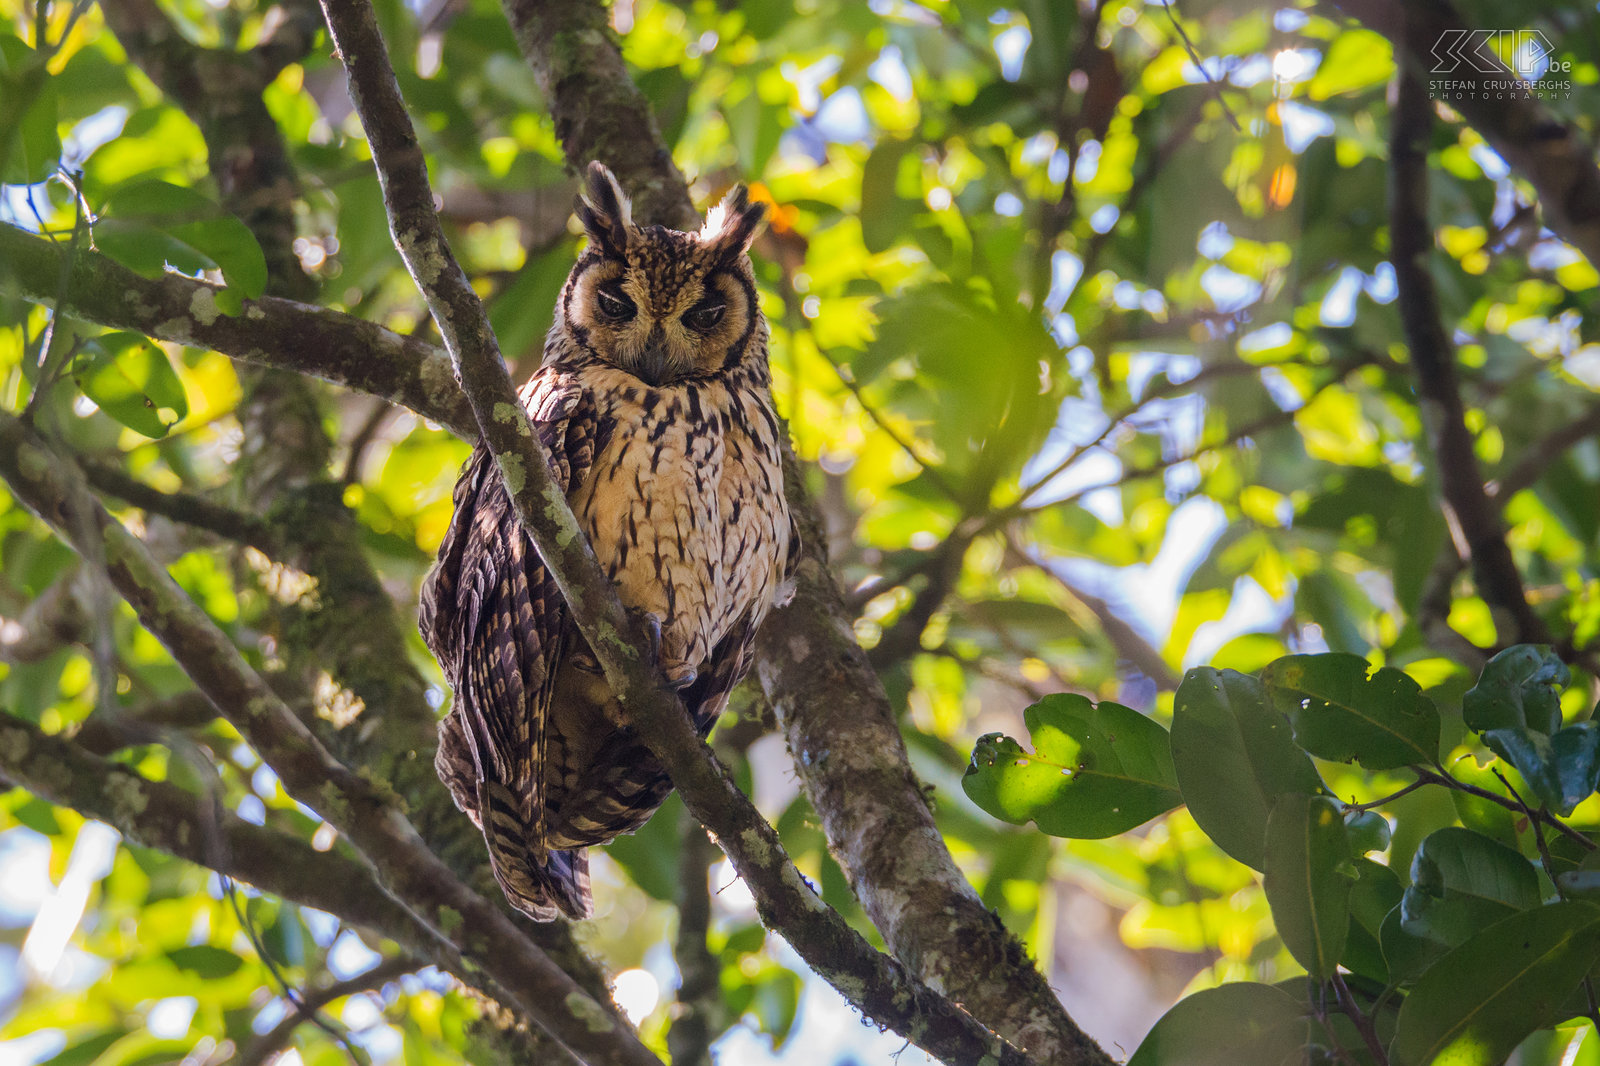 Ranomafana - Madagascan long-eared owl High up in a tree we spotted a Madagascan long-eared owl (Asio madagascariensis). Stefan Cruysberghs